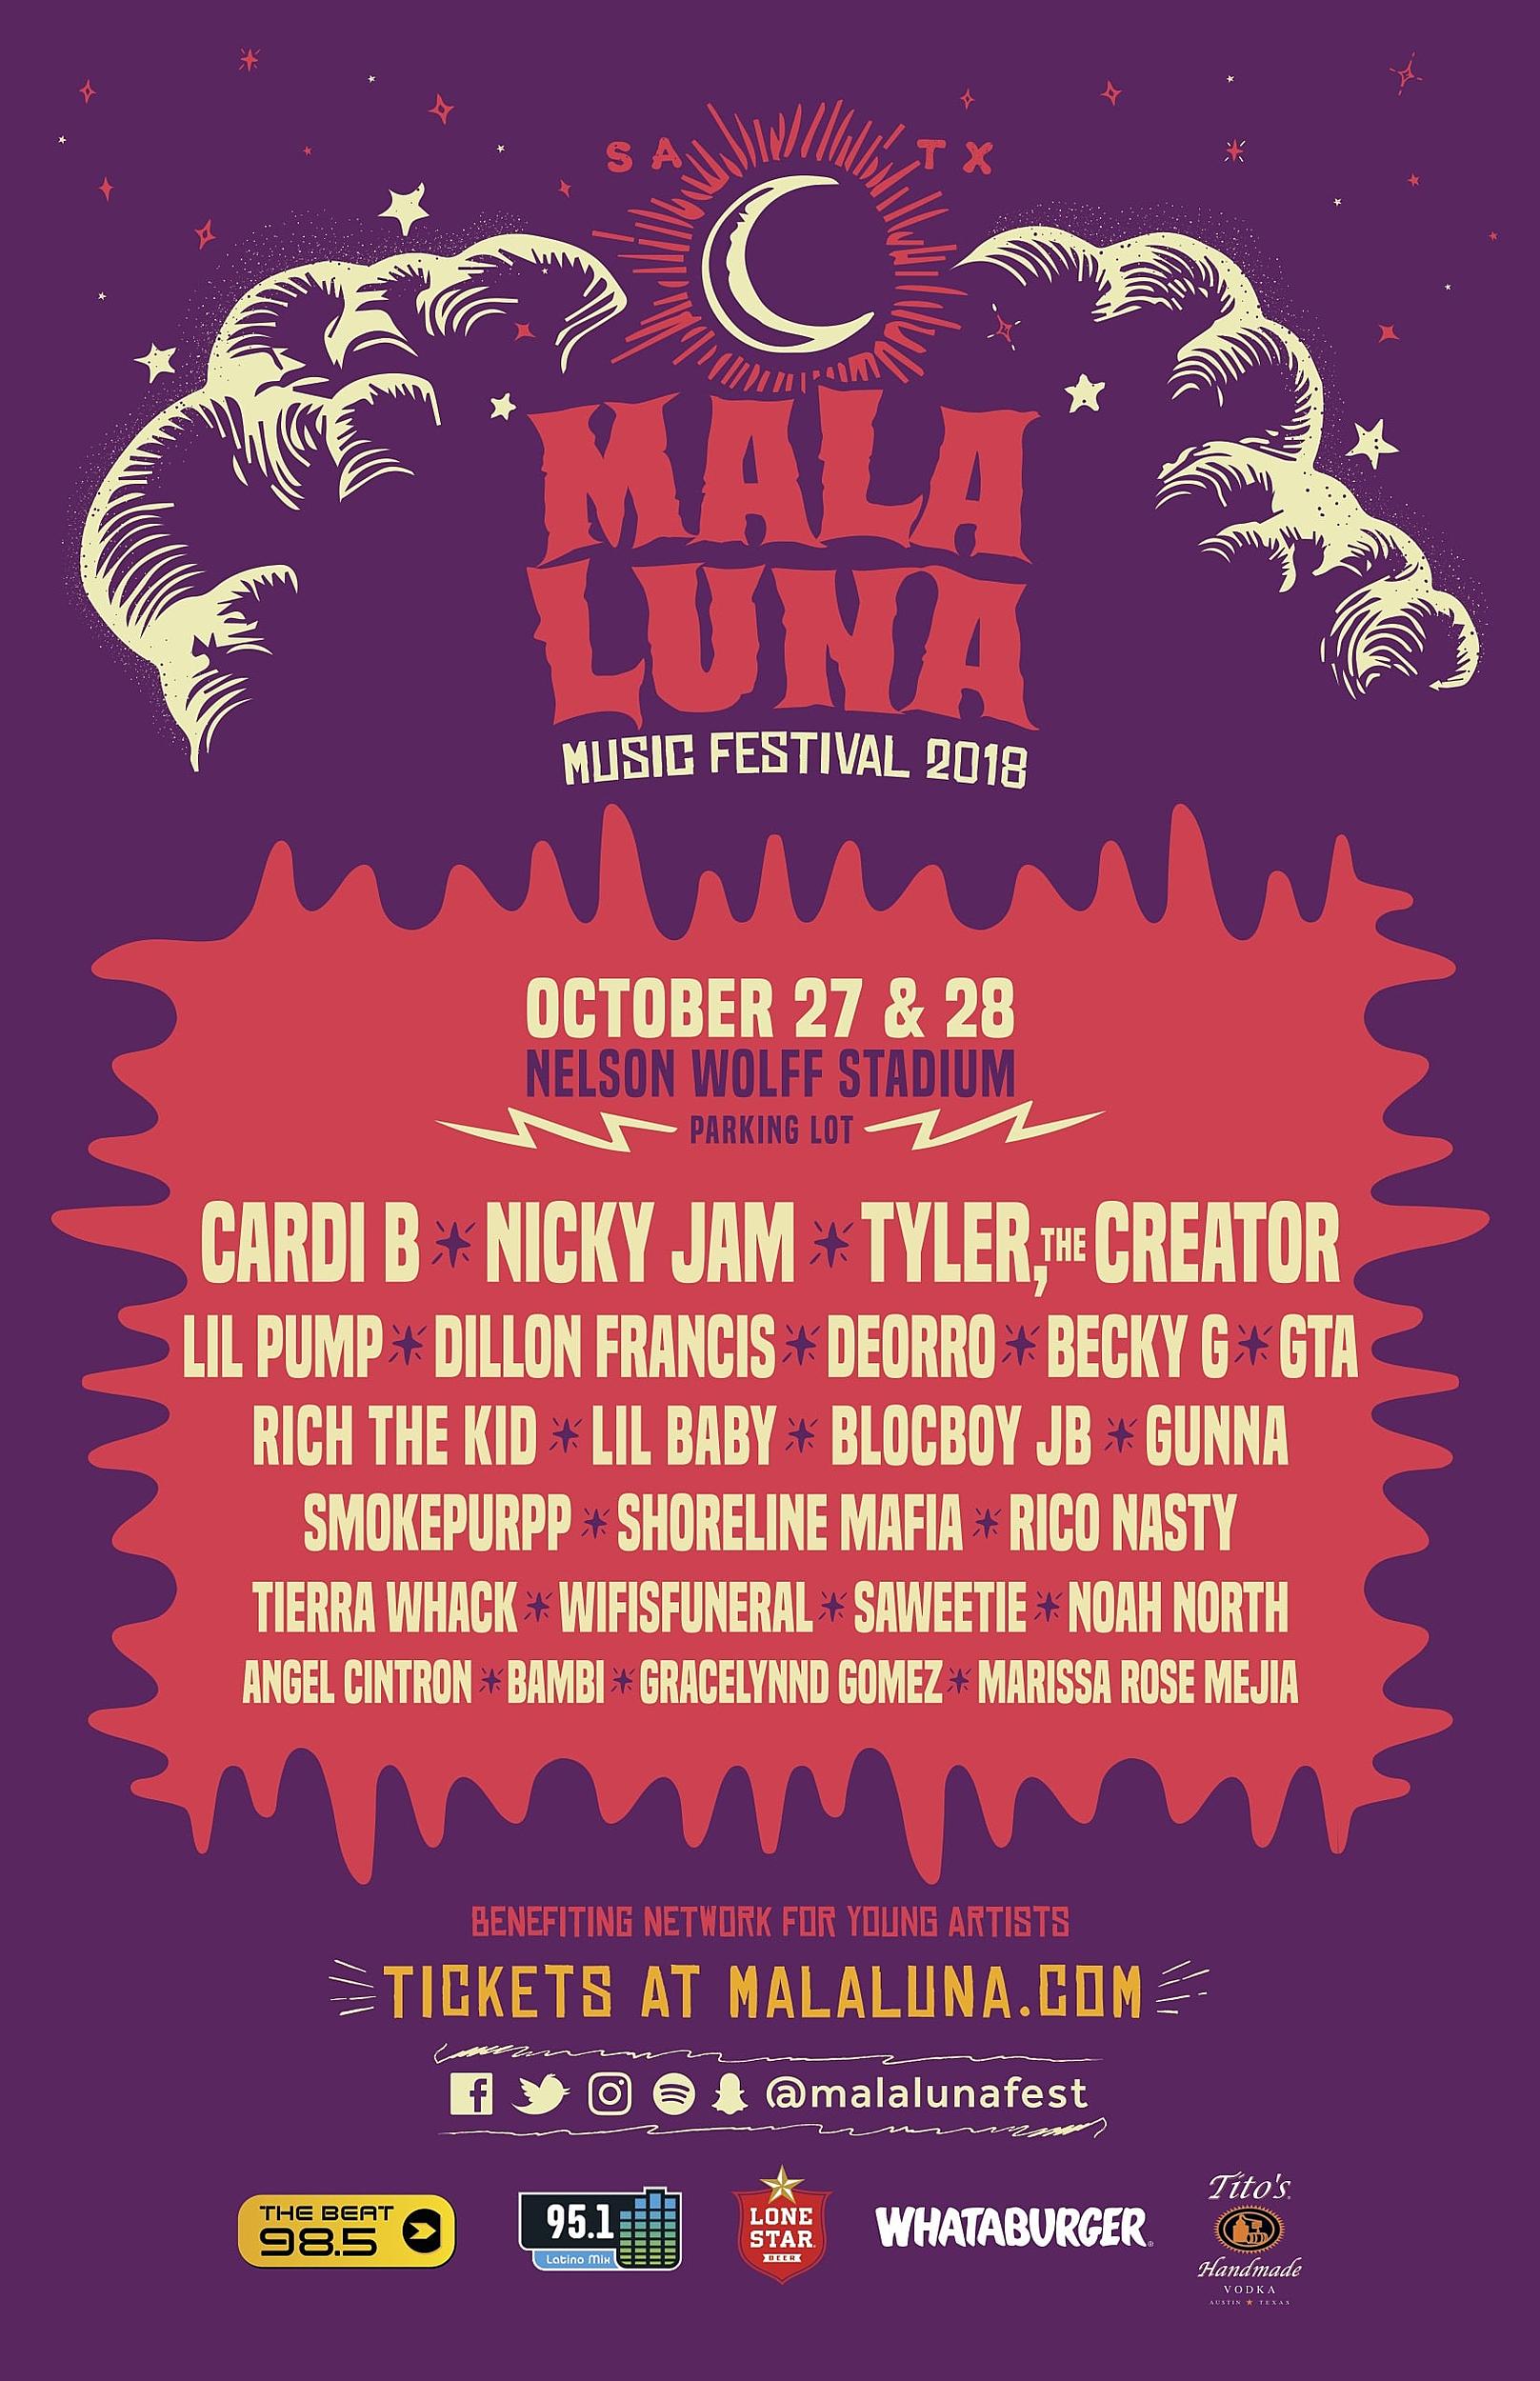 Cardi B to Make First Post-Pregnancy Performance at 2018 Mala Luna Festival